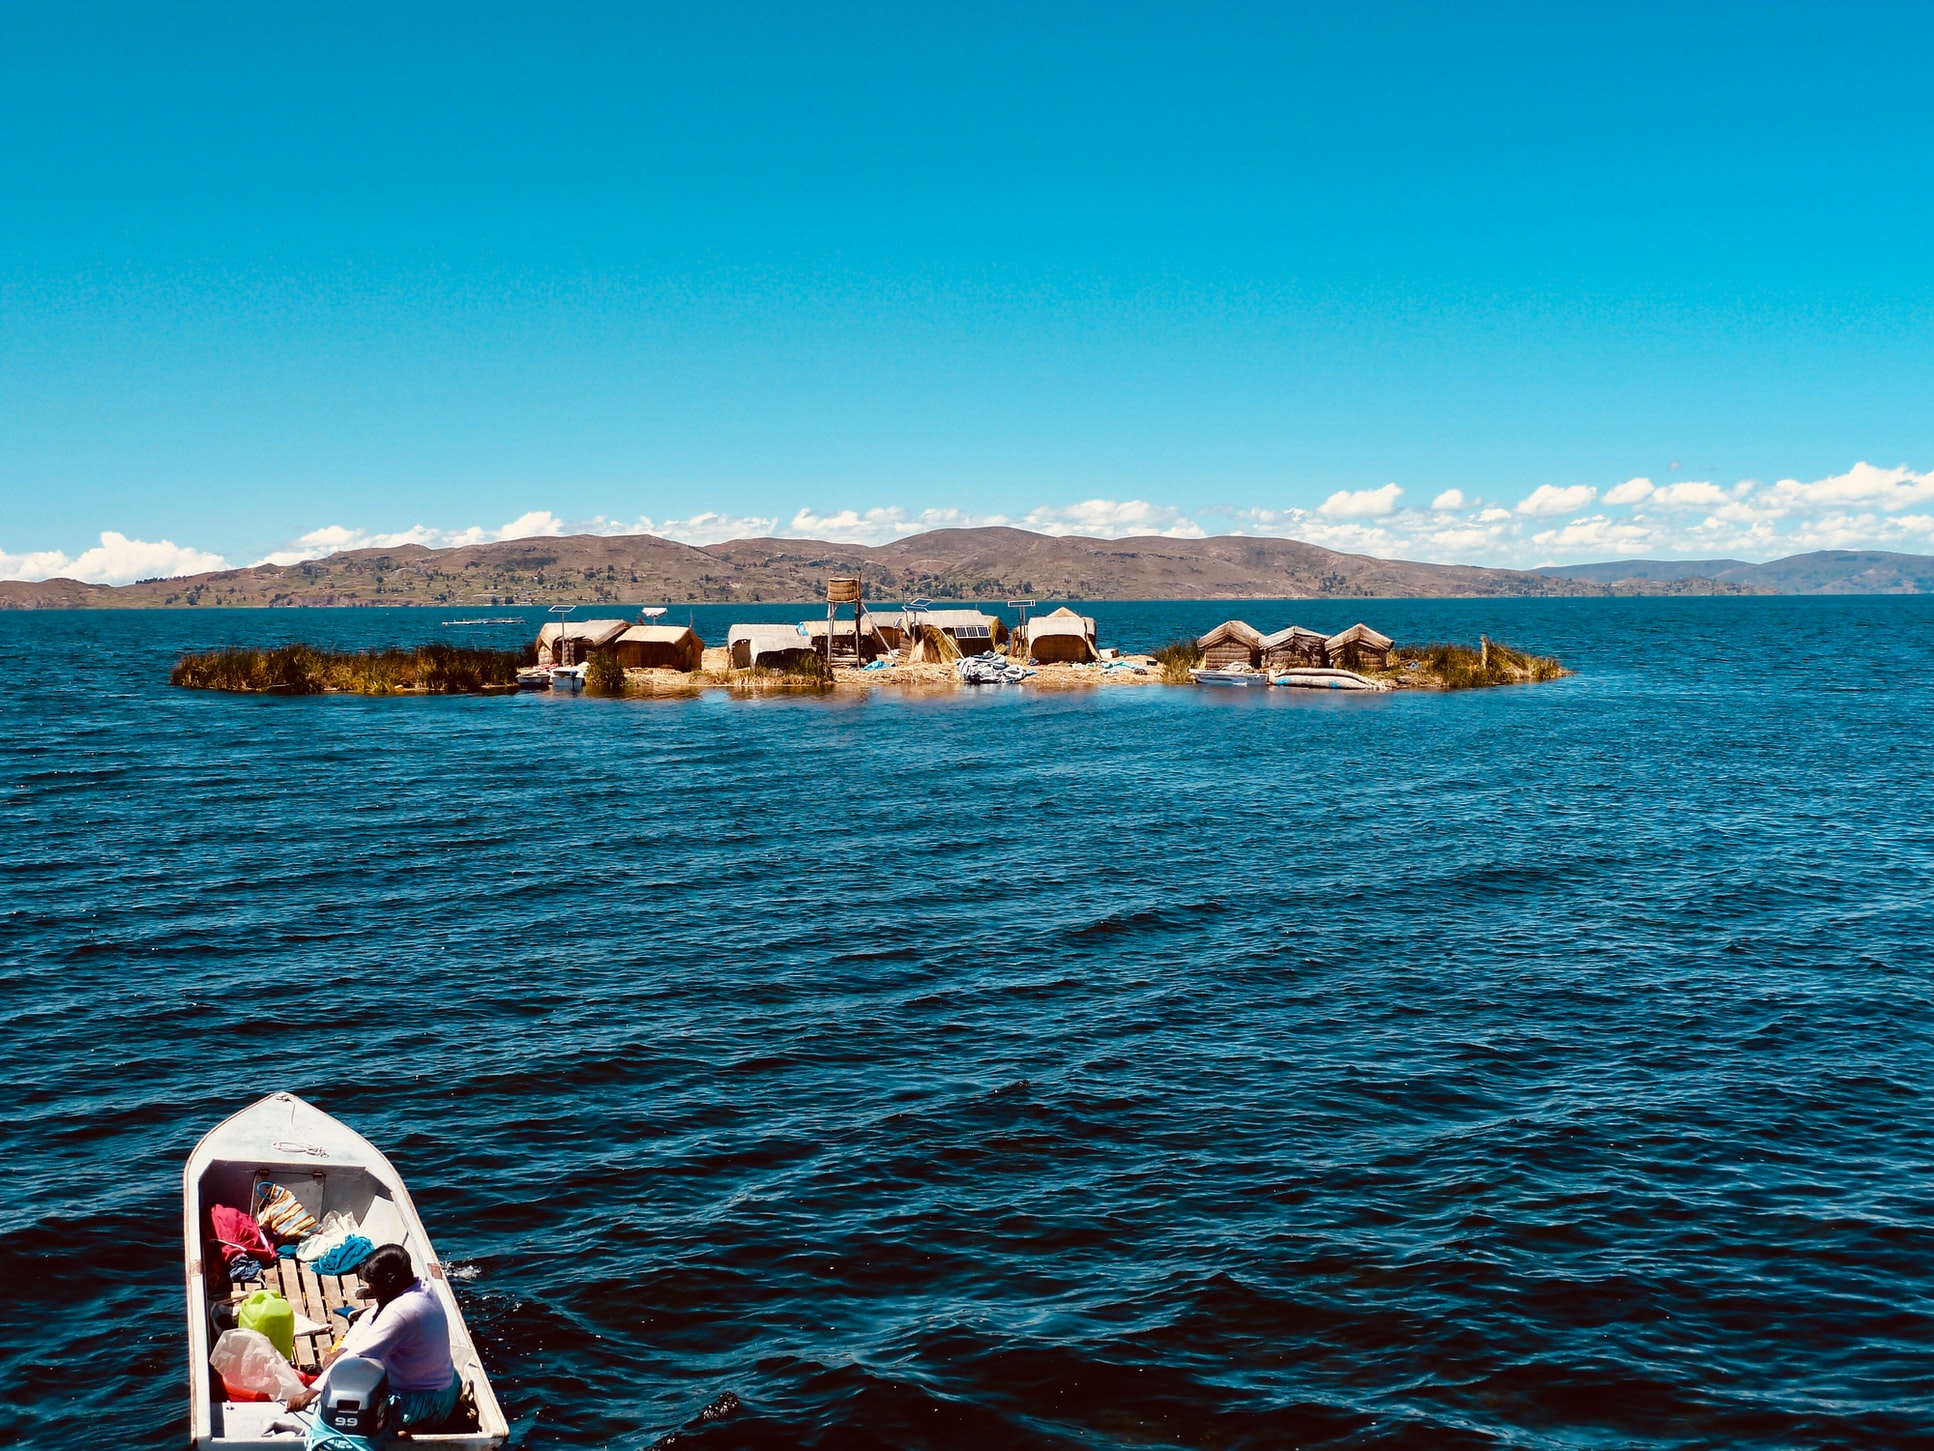 Floating Islands Lake Titicaca